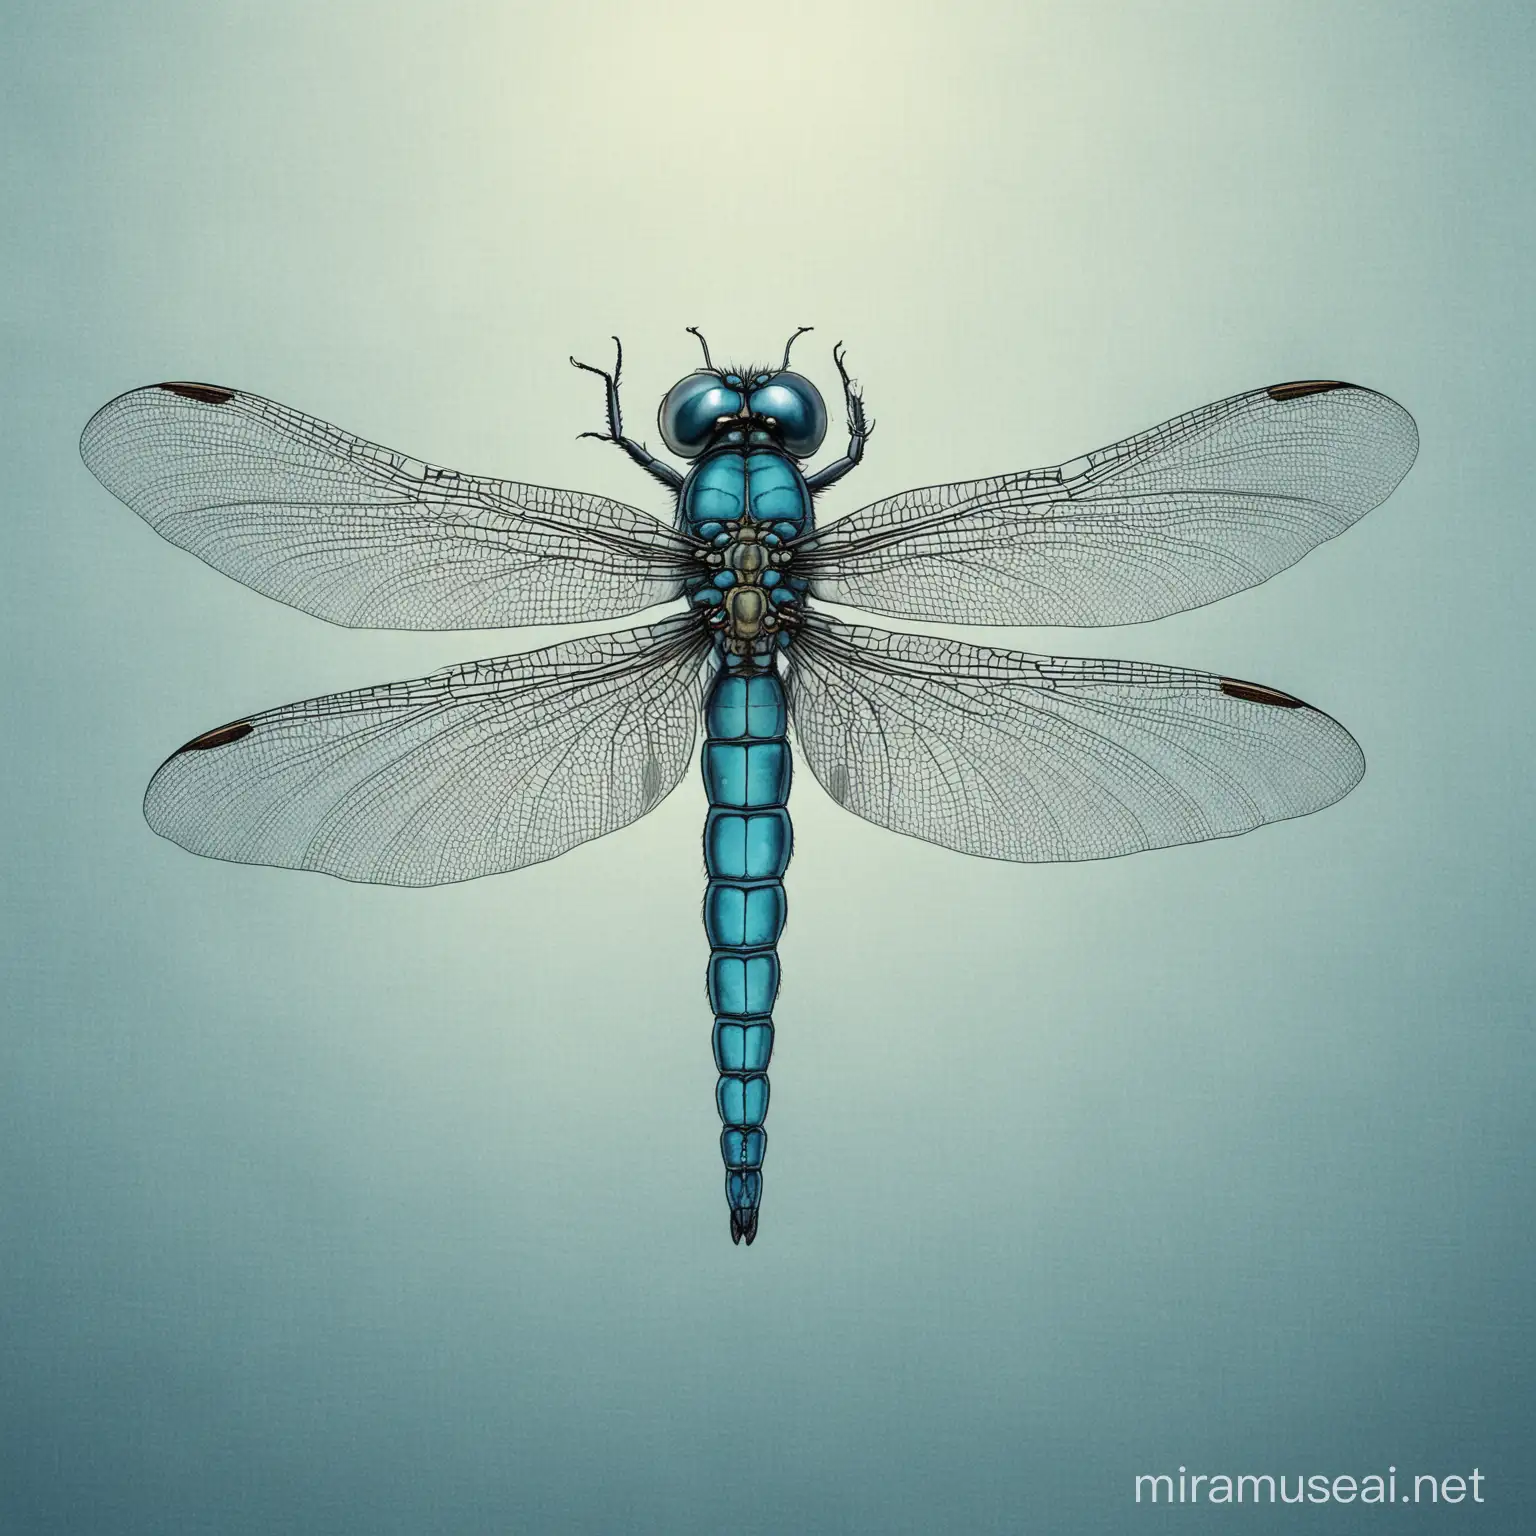 dragonfly, blue, illustration
